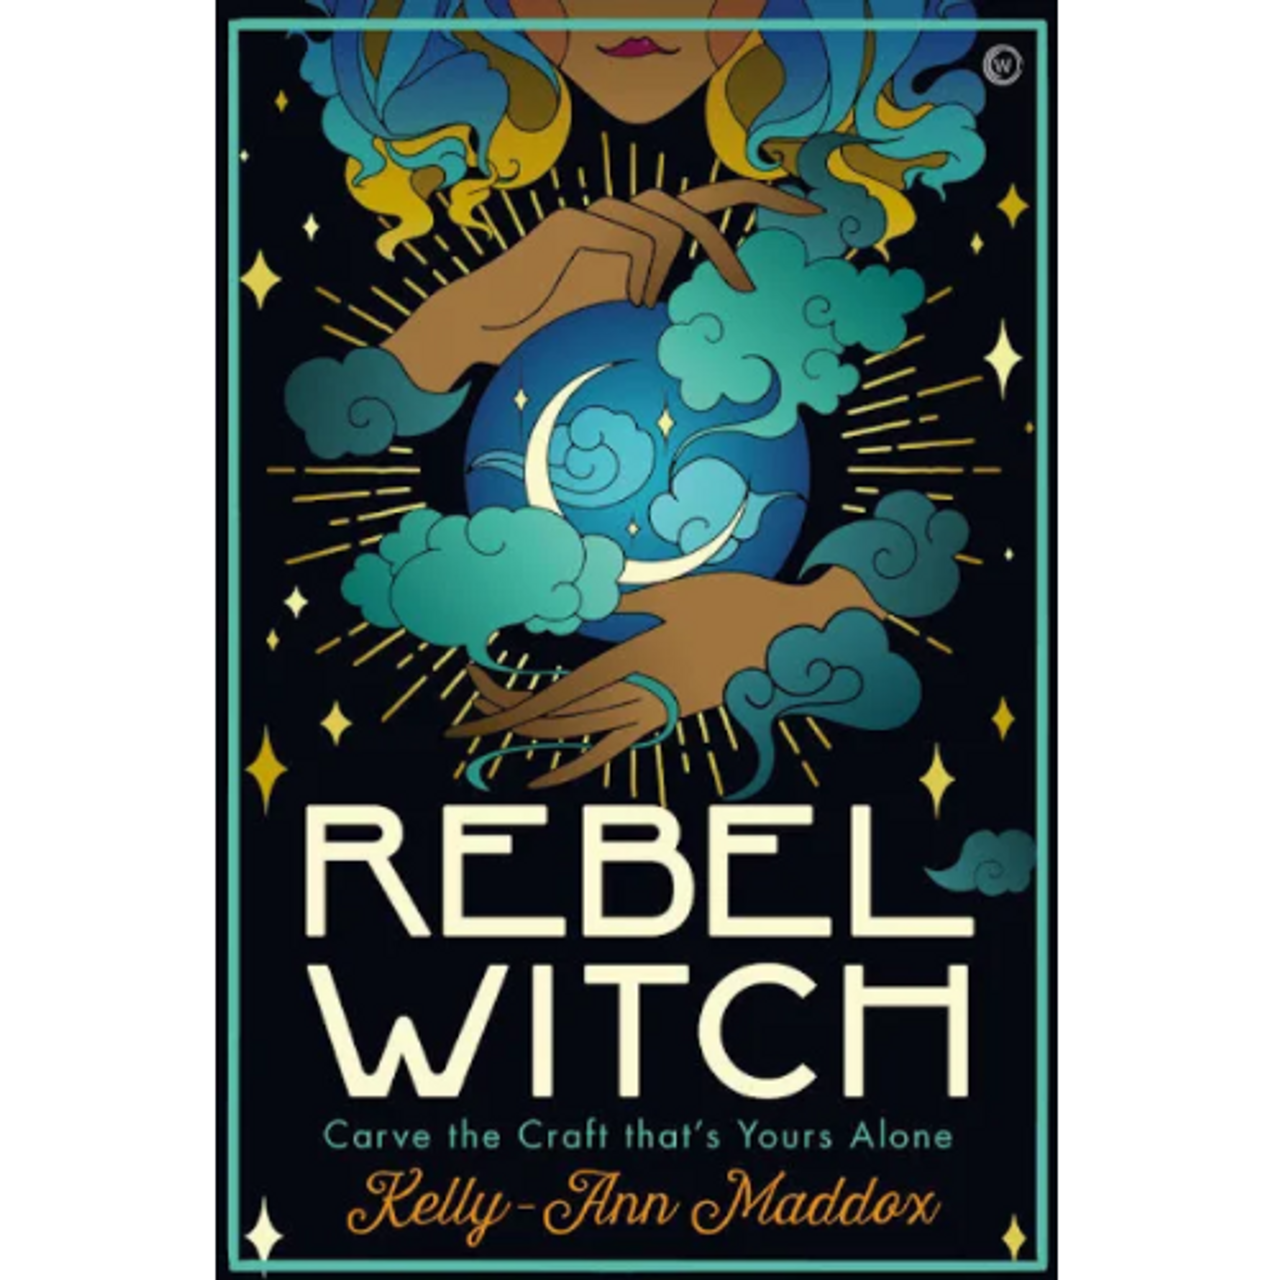 Rebel Witch by Kelly-Ann Maddox